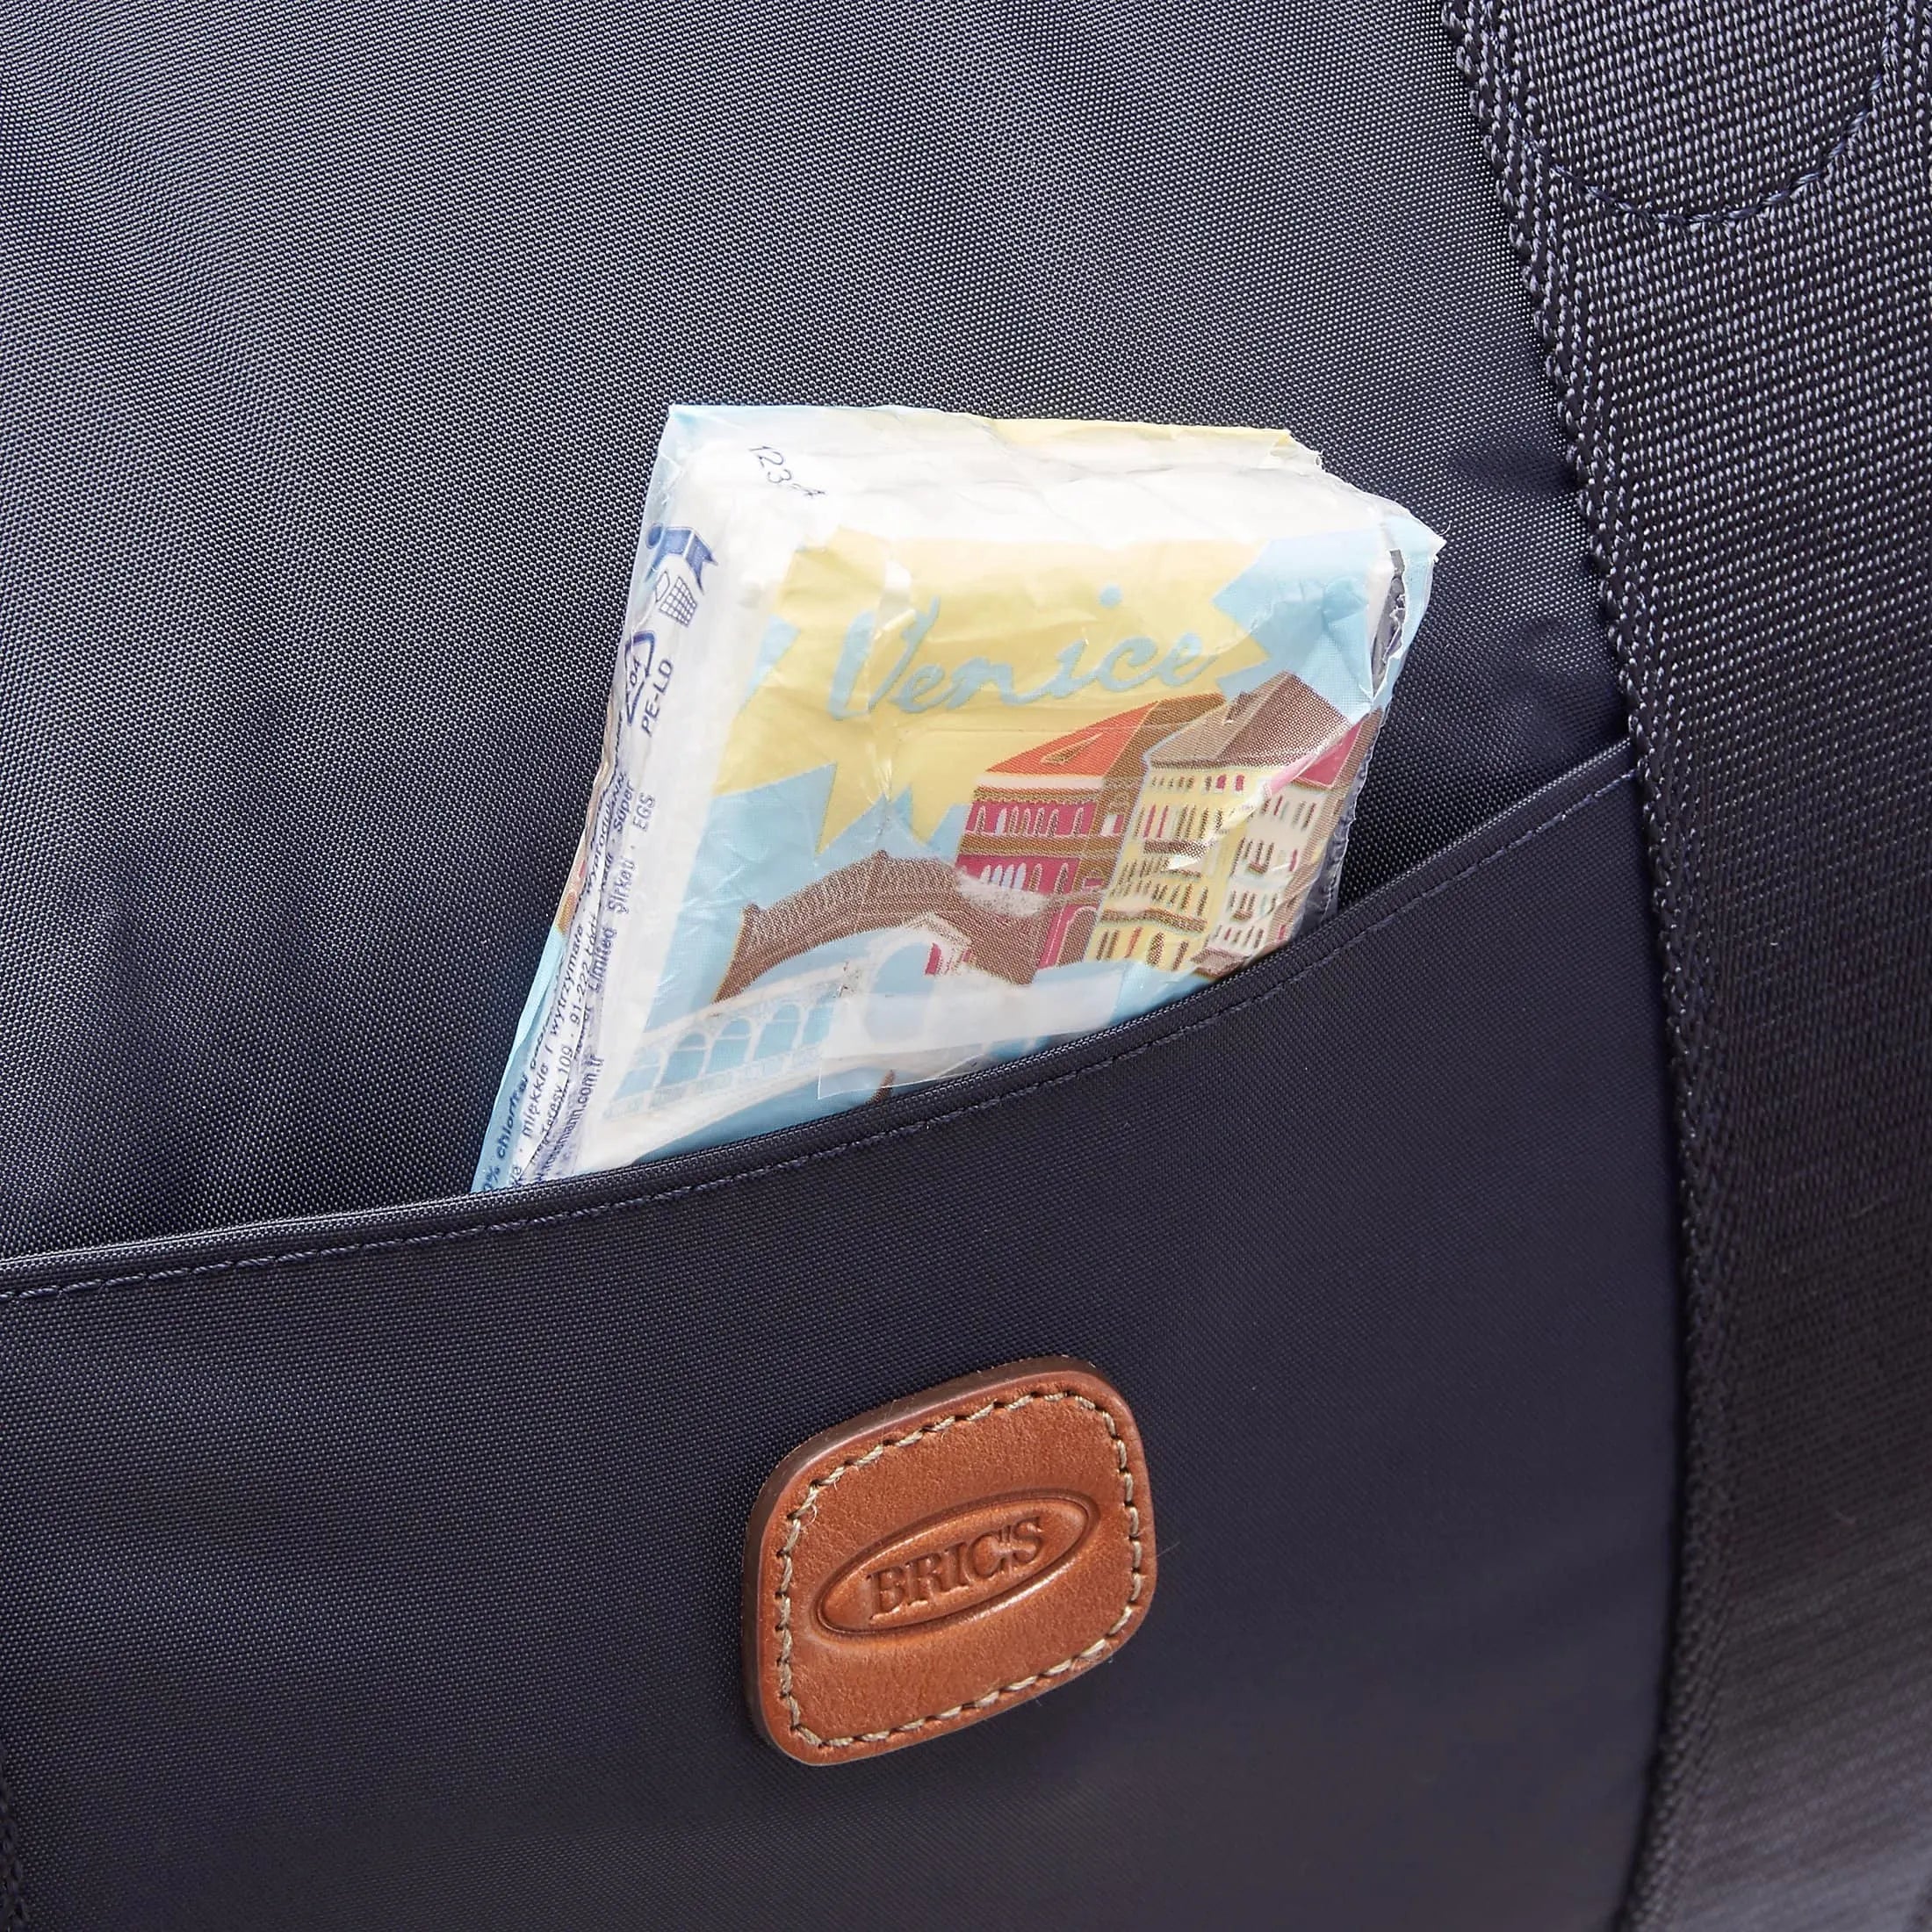 Brics X-Bag travel bag 55 cm - silver